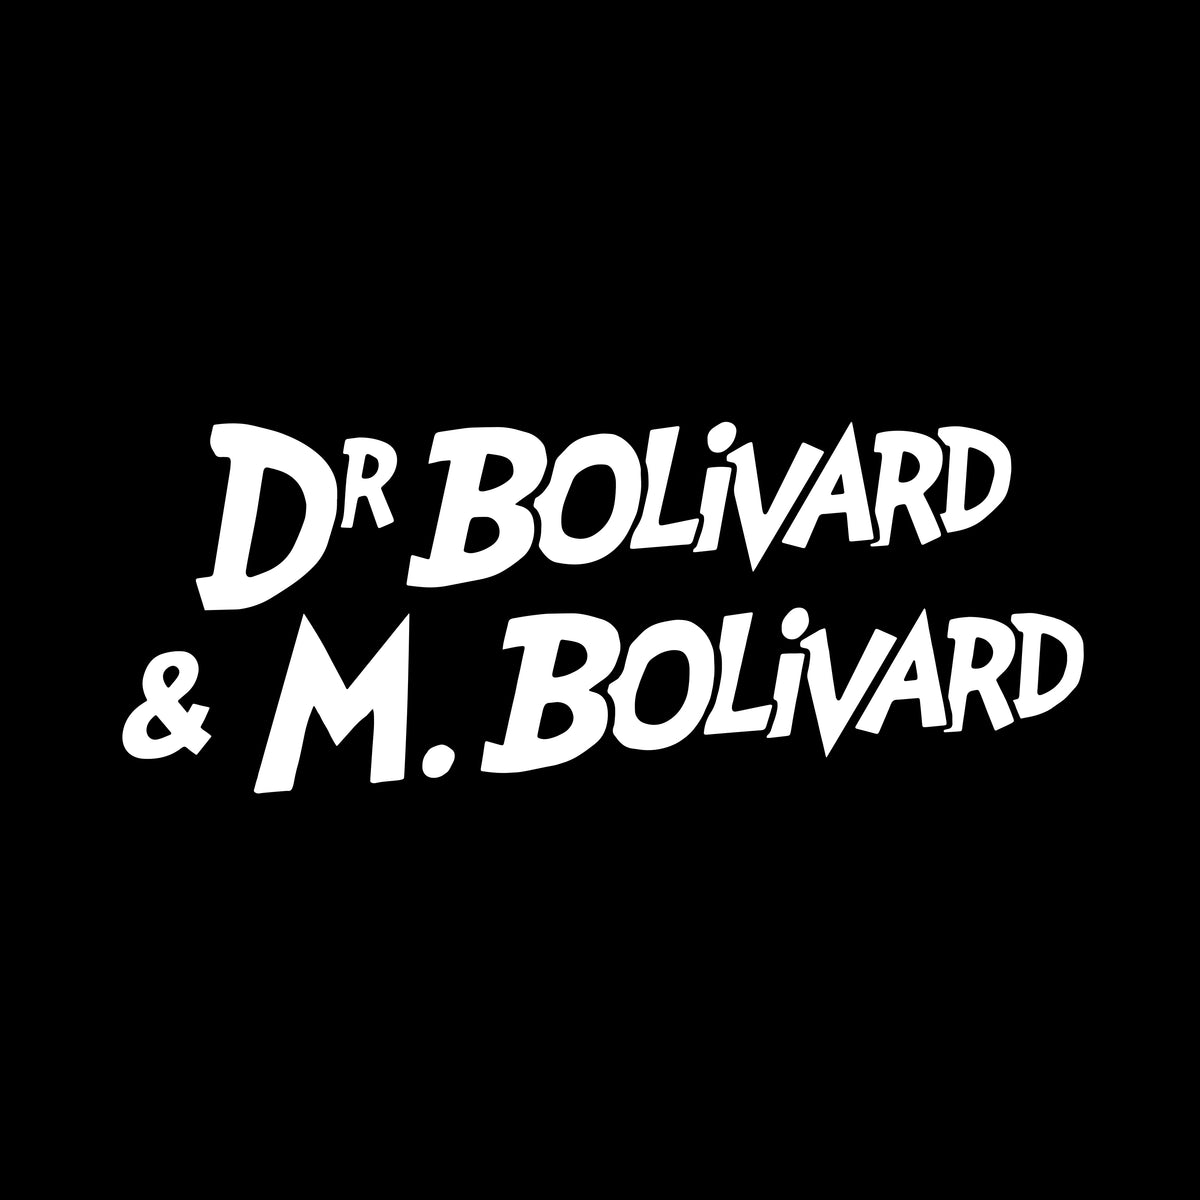 Dr Bolivard & M. Bolivard - CD